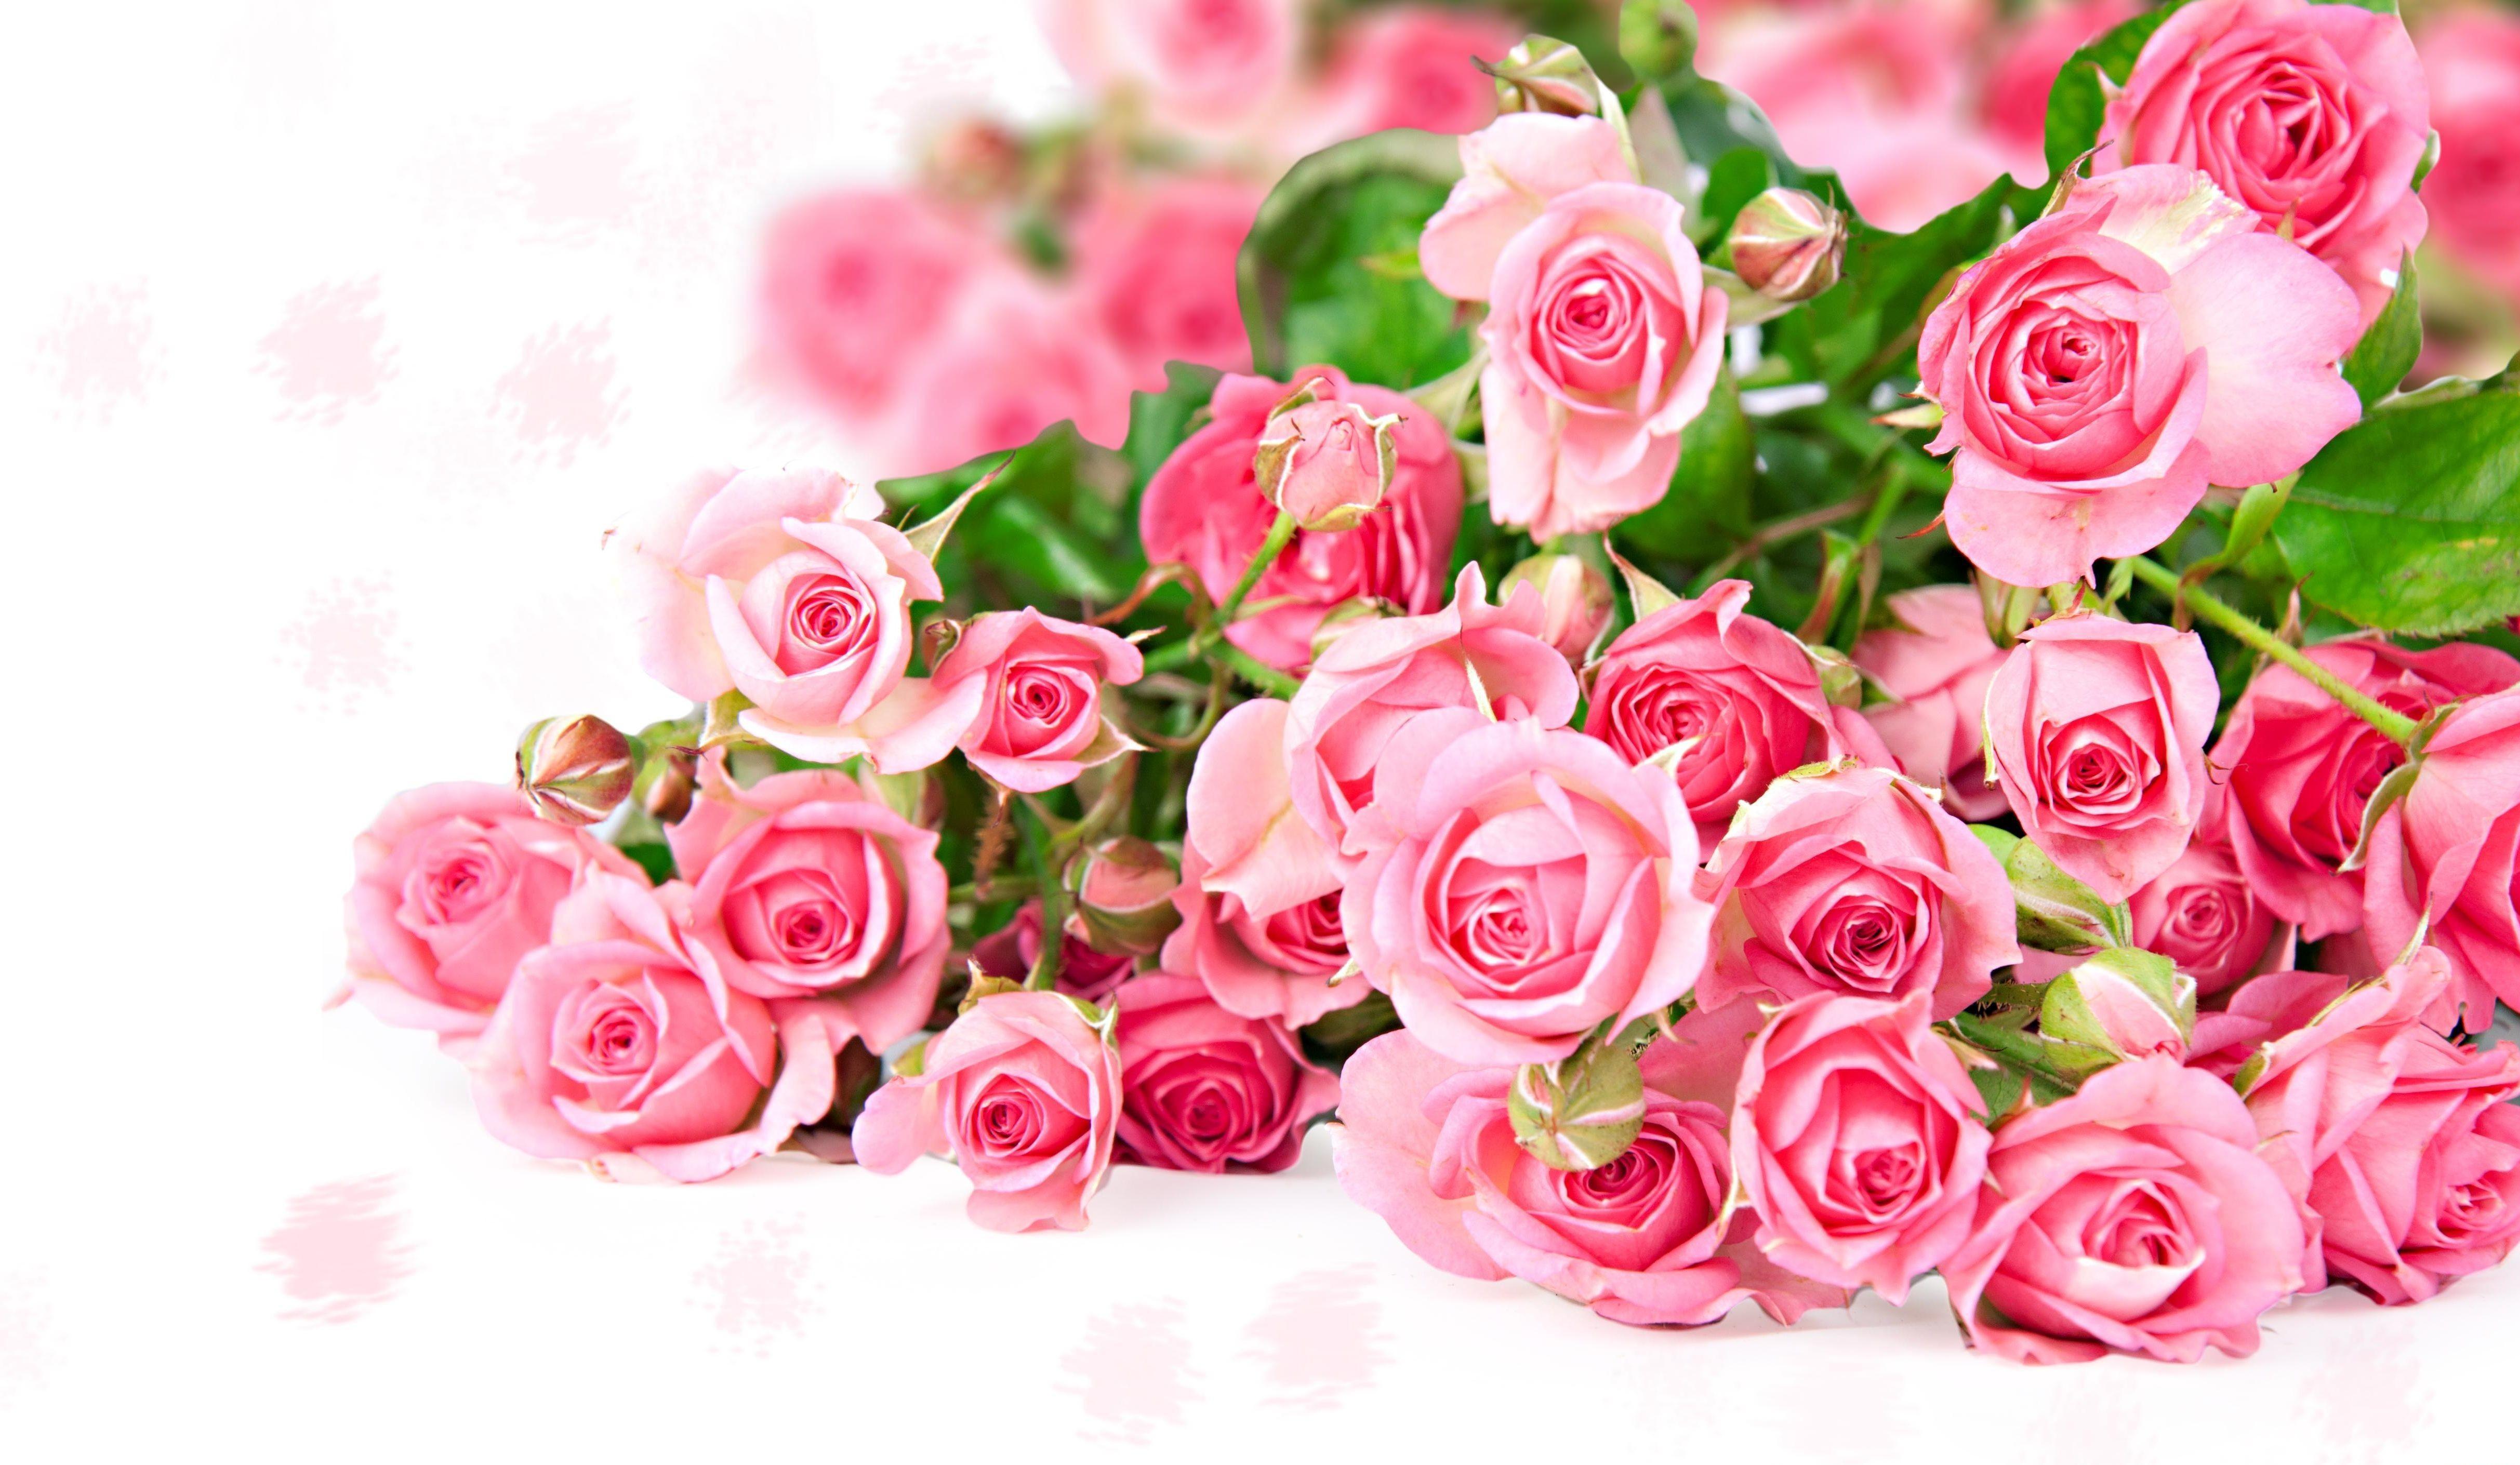 Download wallpaper 4850x2820 roses, flowers, bouquet, pink, tender